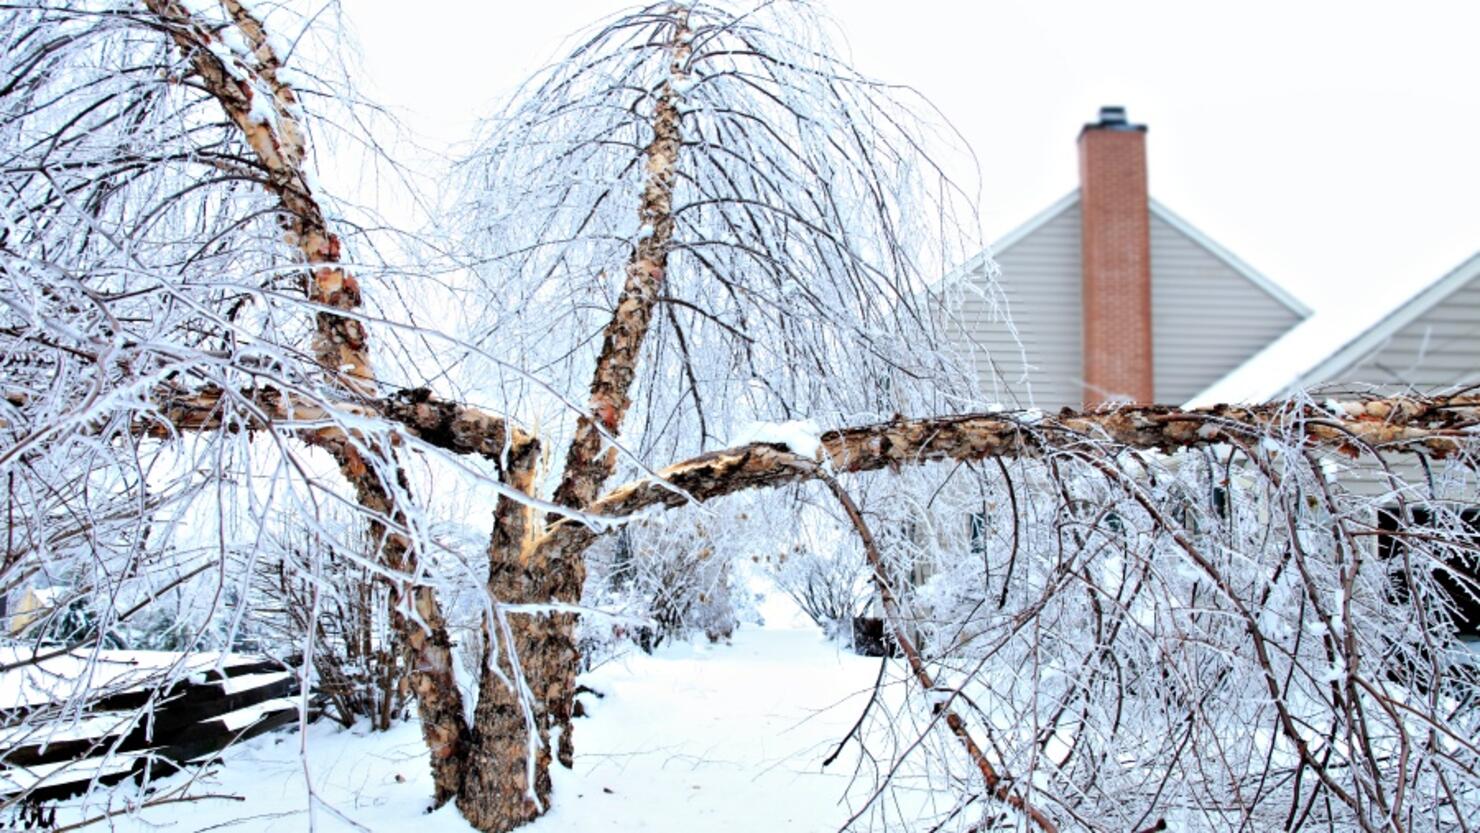 Fallen birch tree after ice storm